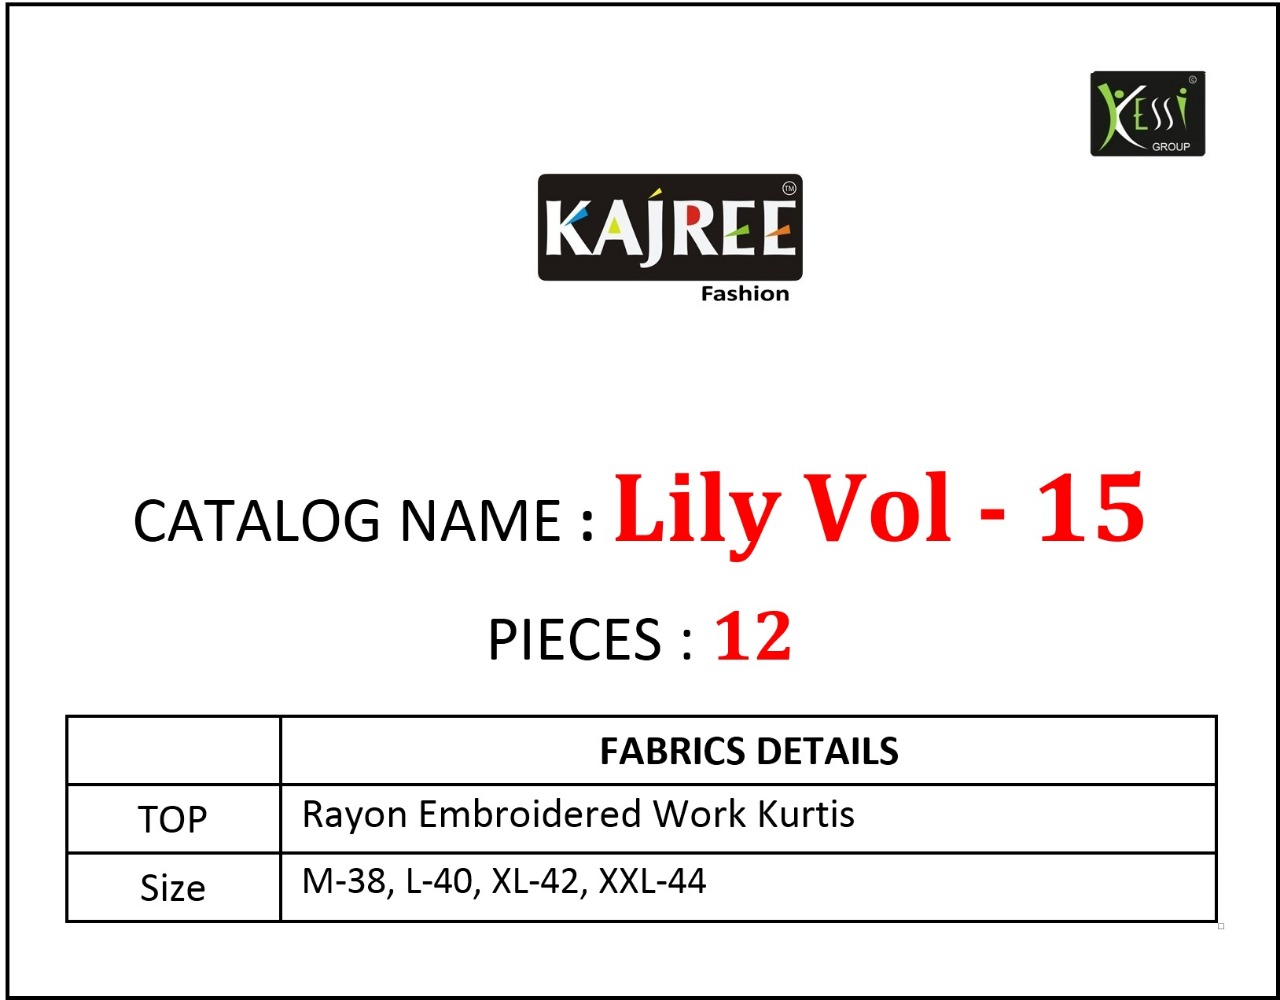 Kajree Lily Vol 15 Catalogue Fancy Rayon Embroidery Work Kurtis Wholesale Collection Online Surat